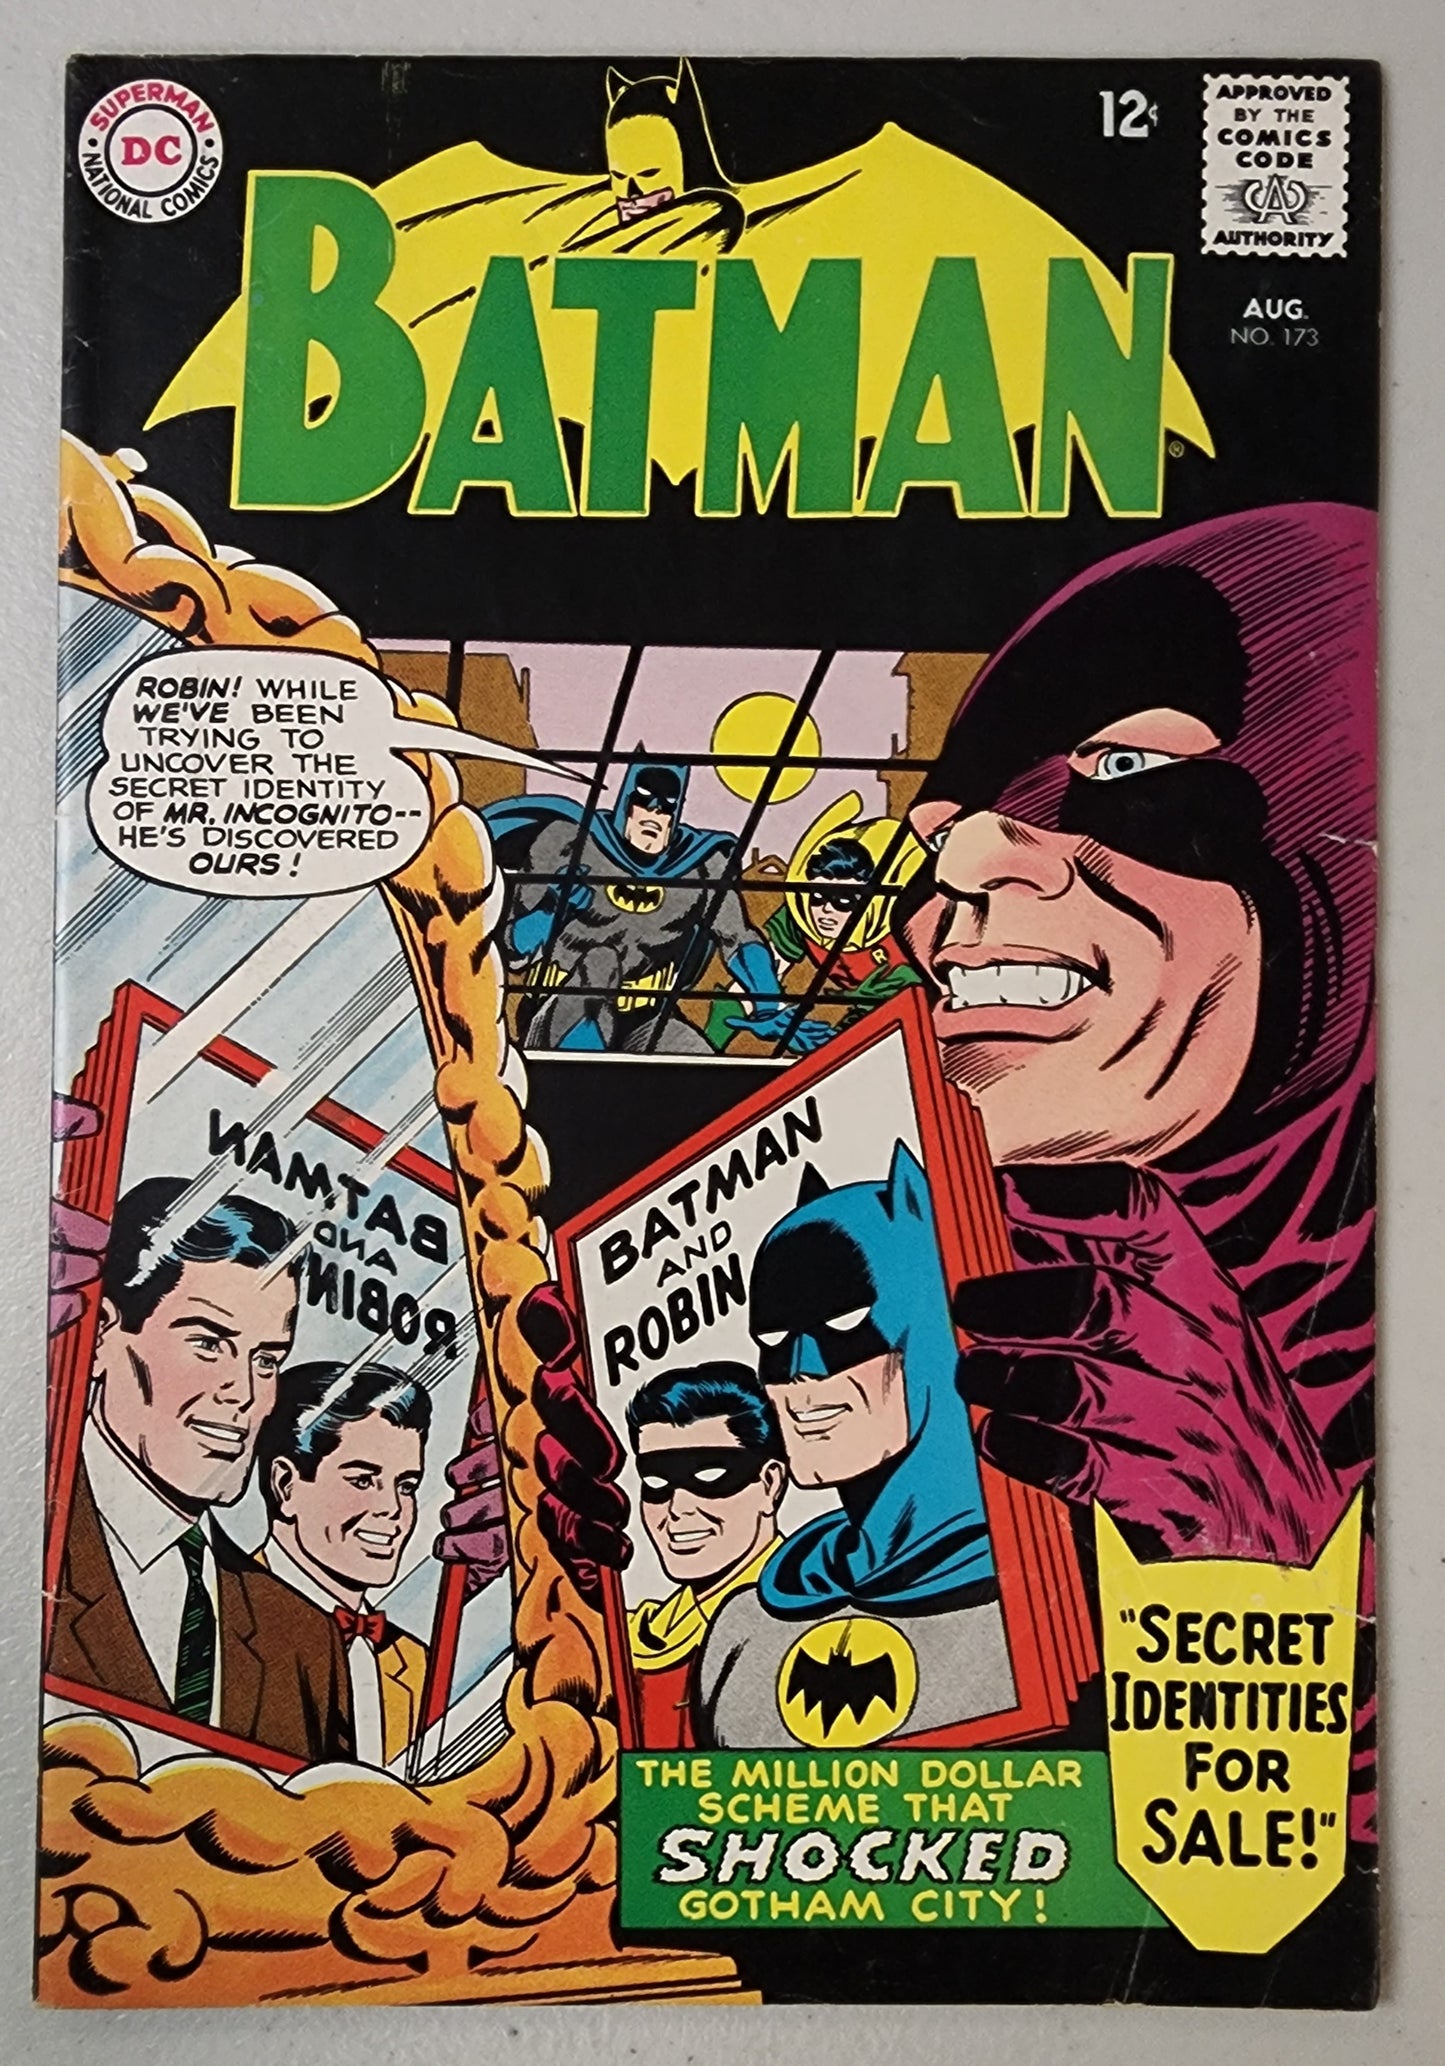 BATMAN #173 1965